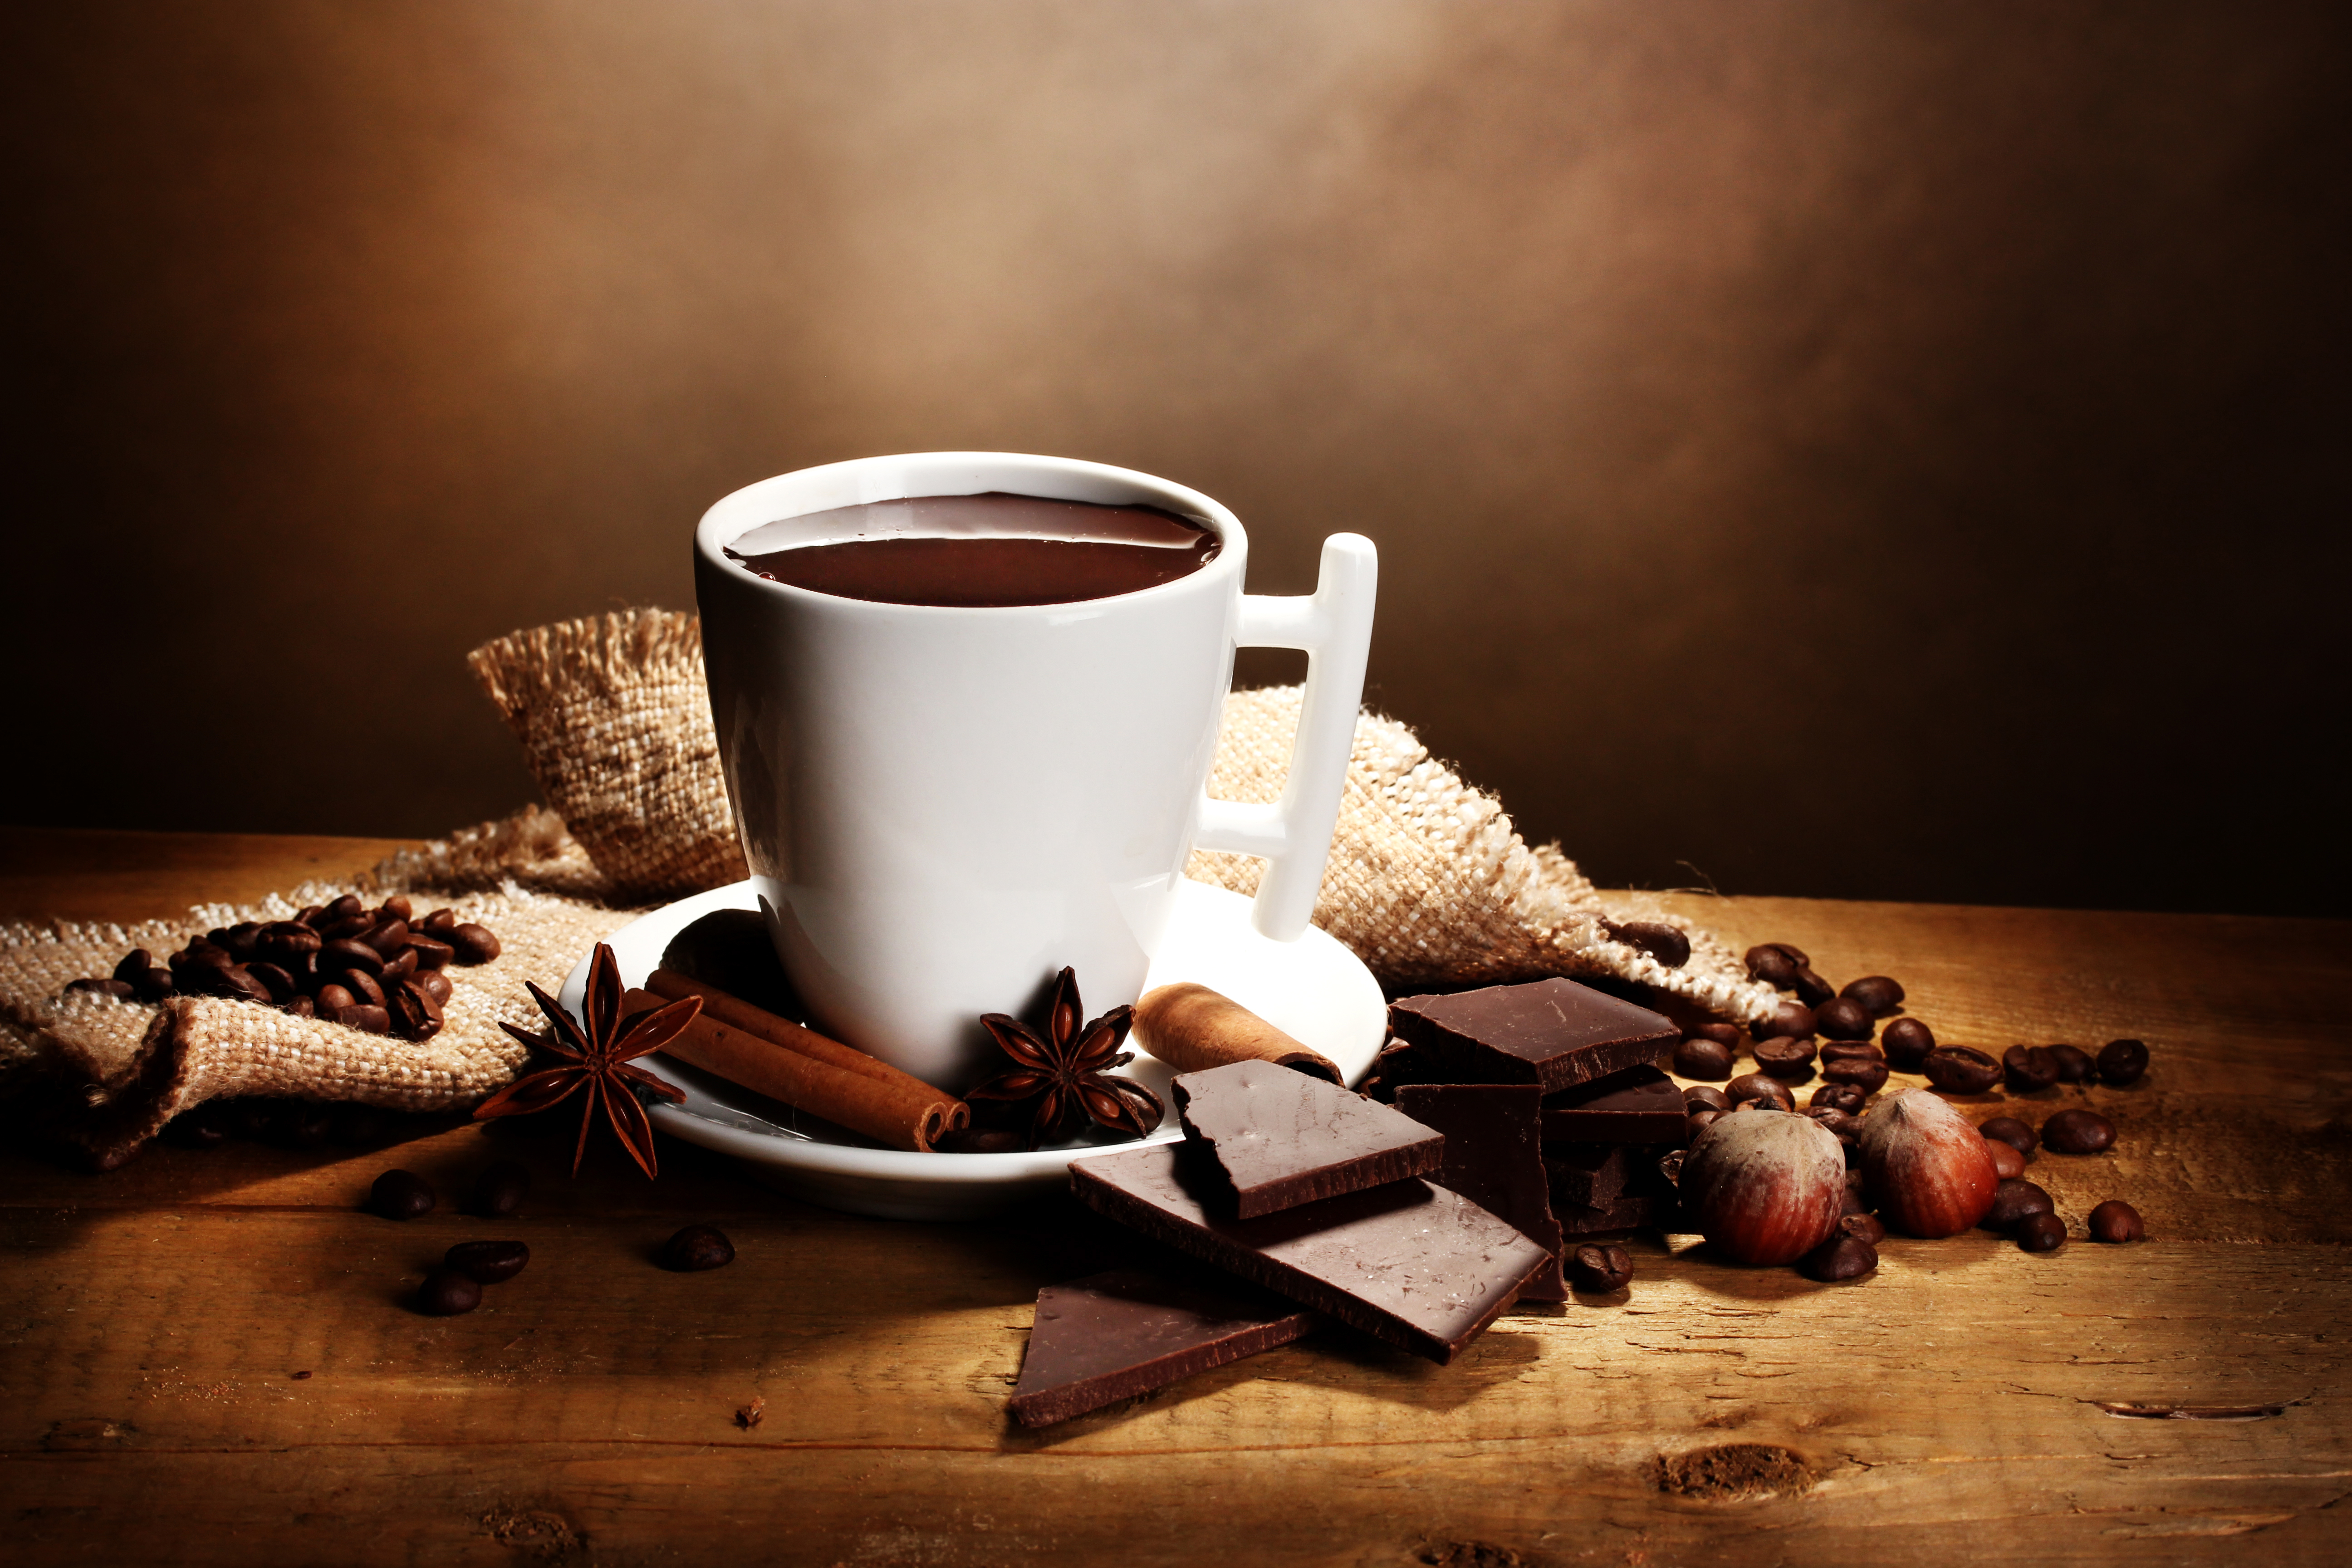 Coffee i chocolate. Кофе и шоколад. Чай кофе шоколад. Горячий шоколад. Чашка кофе.